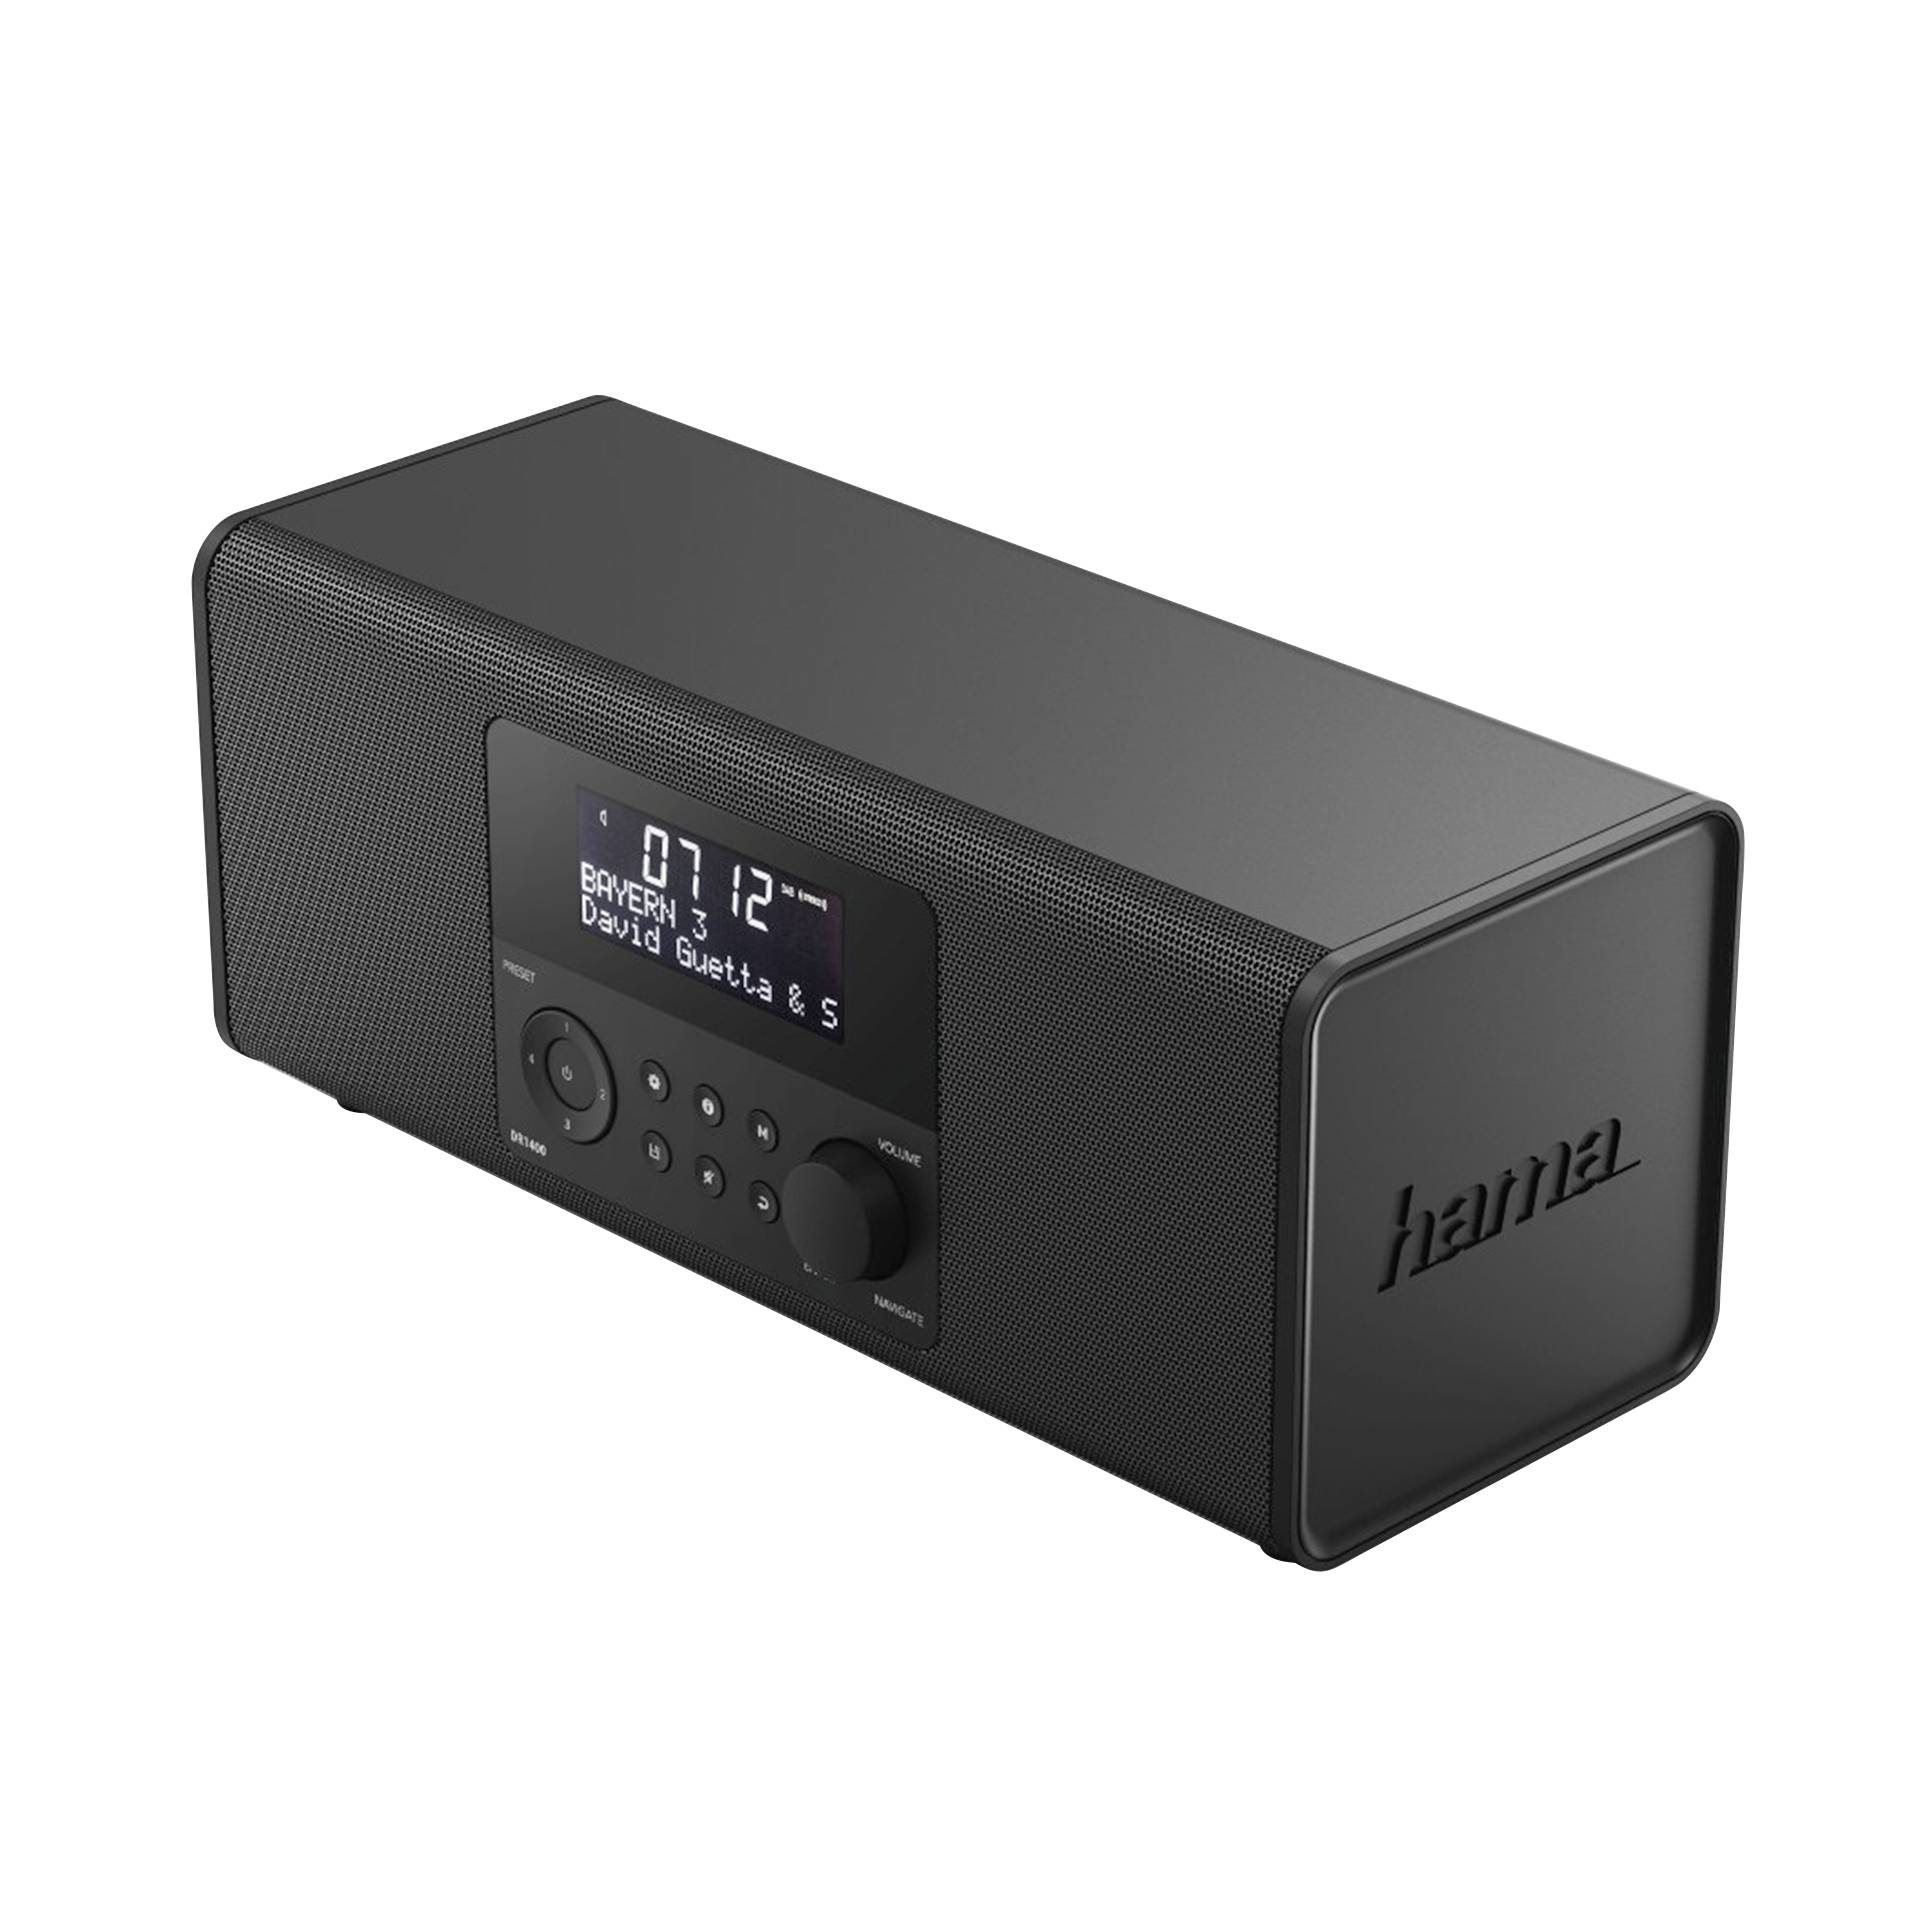 Hama -Digitalradio DR1400 DAB+ -Hama / Hardware/Electronic / DAB FM